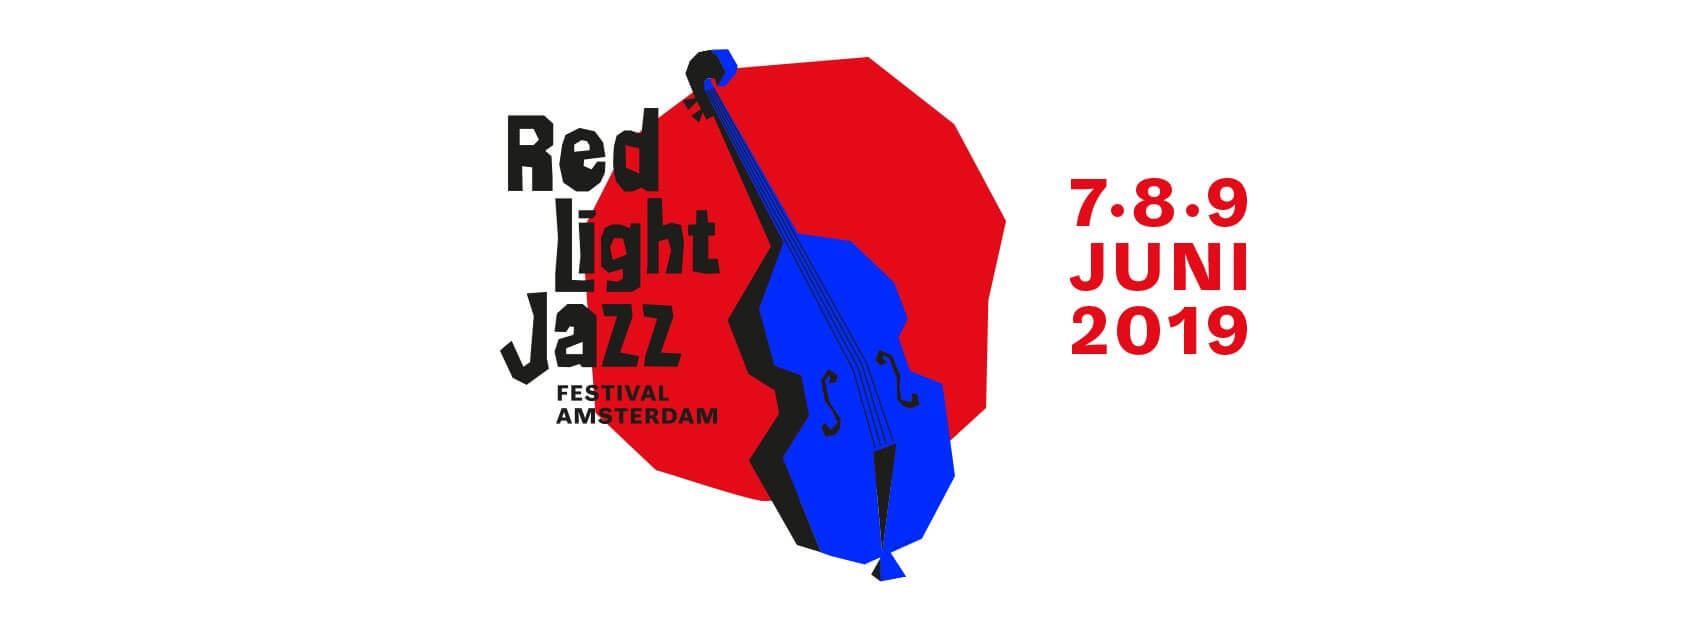 Red Light Jazz 2019 logo